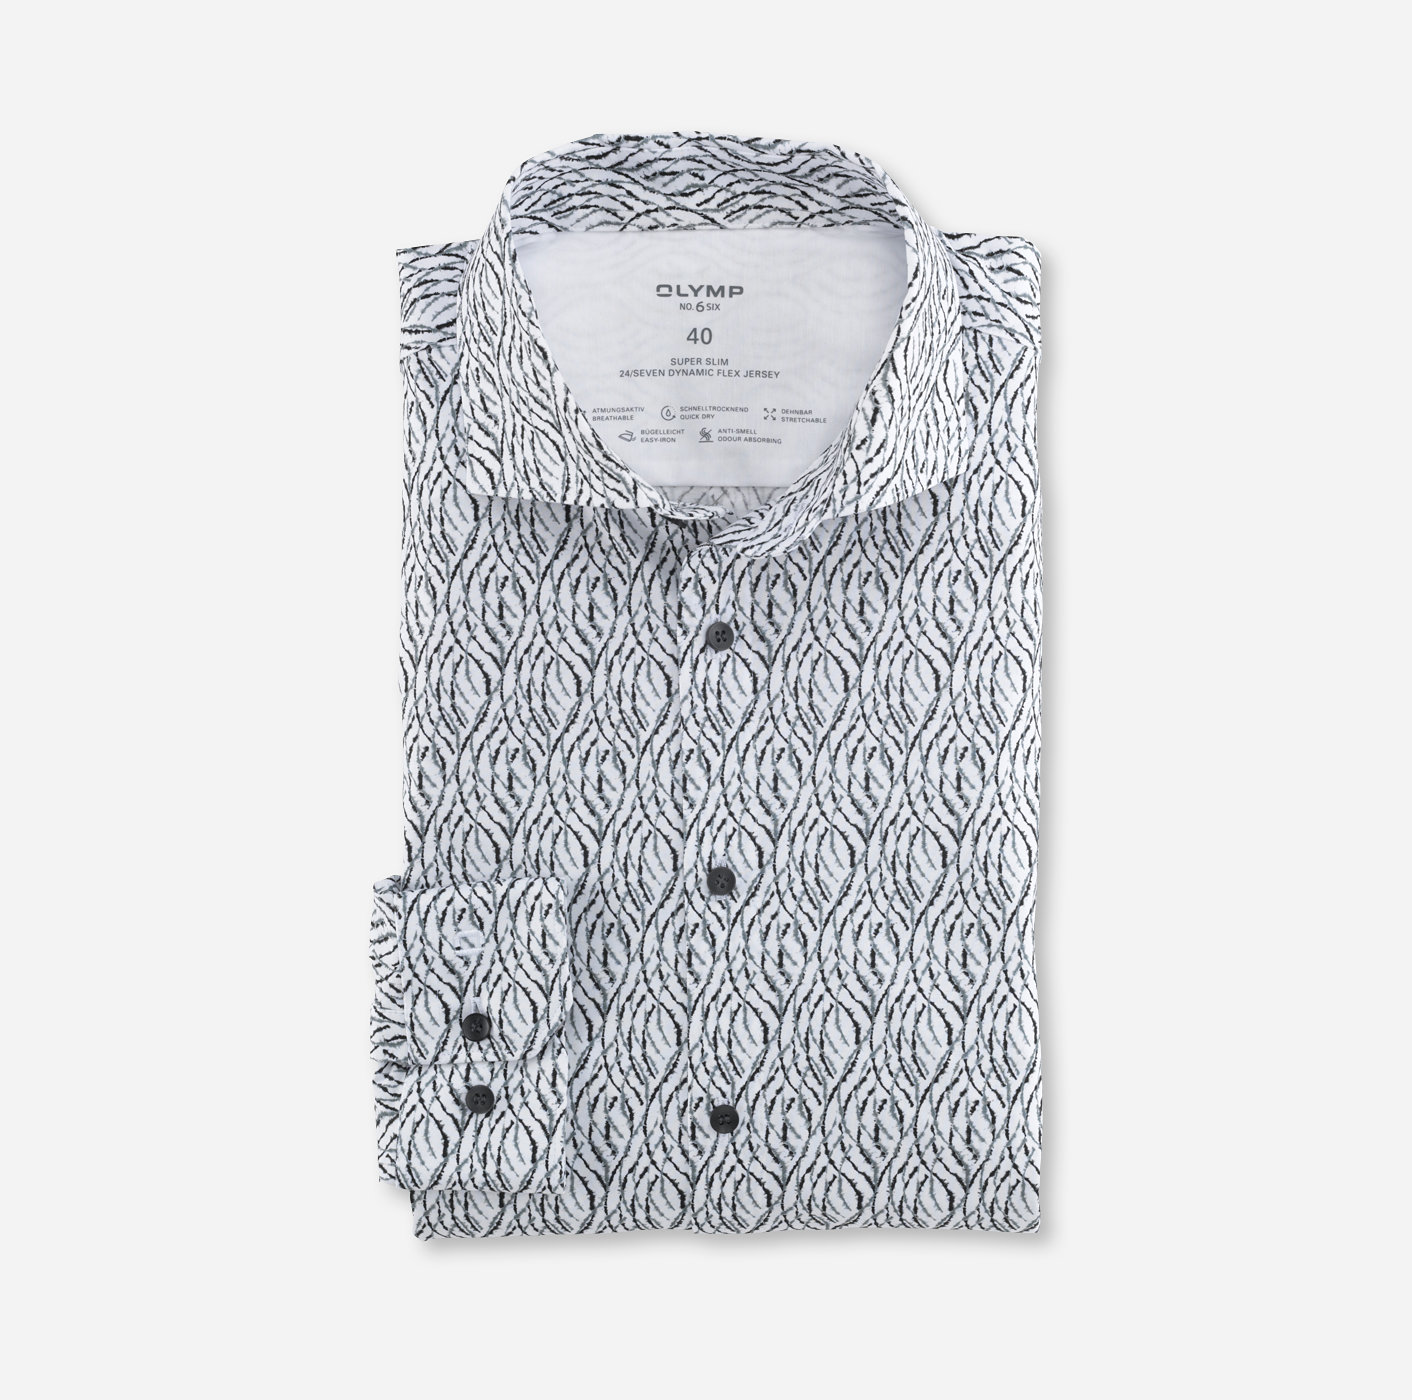 OLYMP No. Six 24/Seven, super slim, Business shirt, Kent, Silver Grey